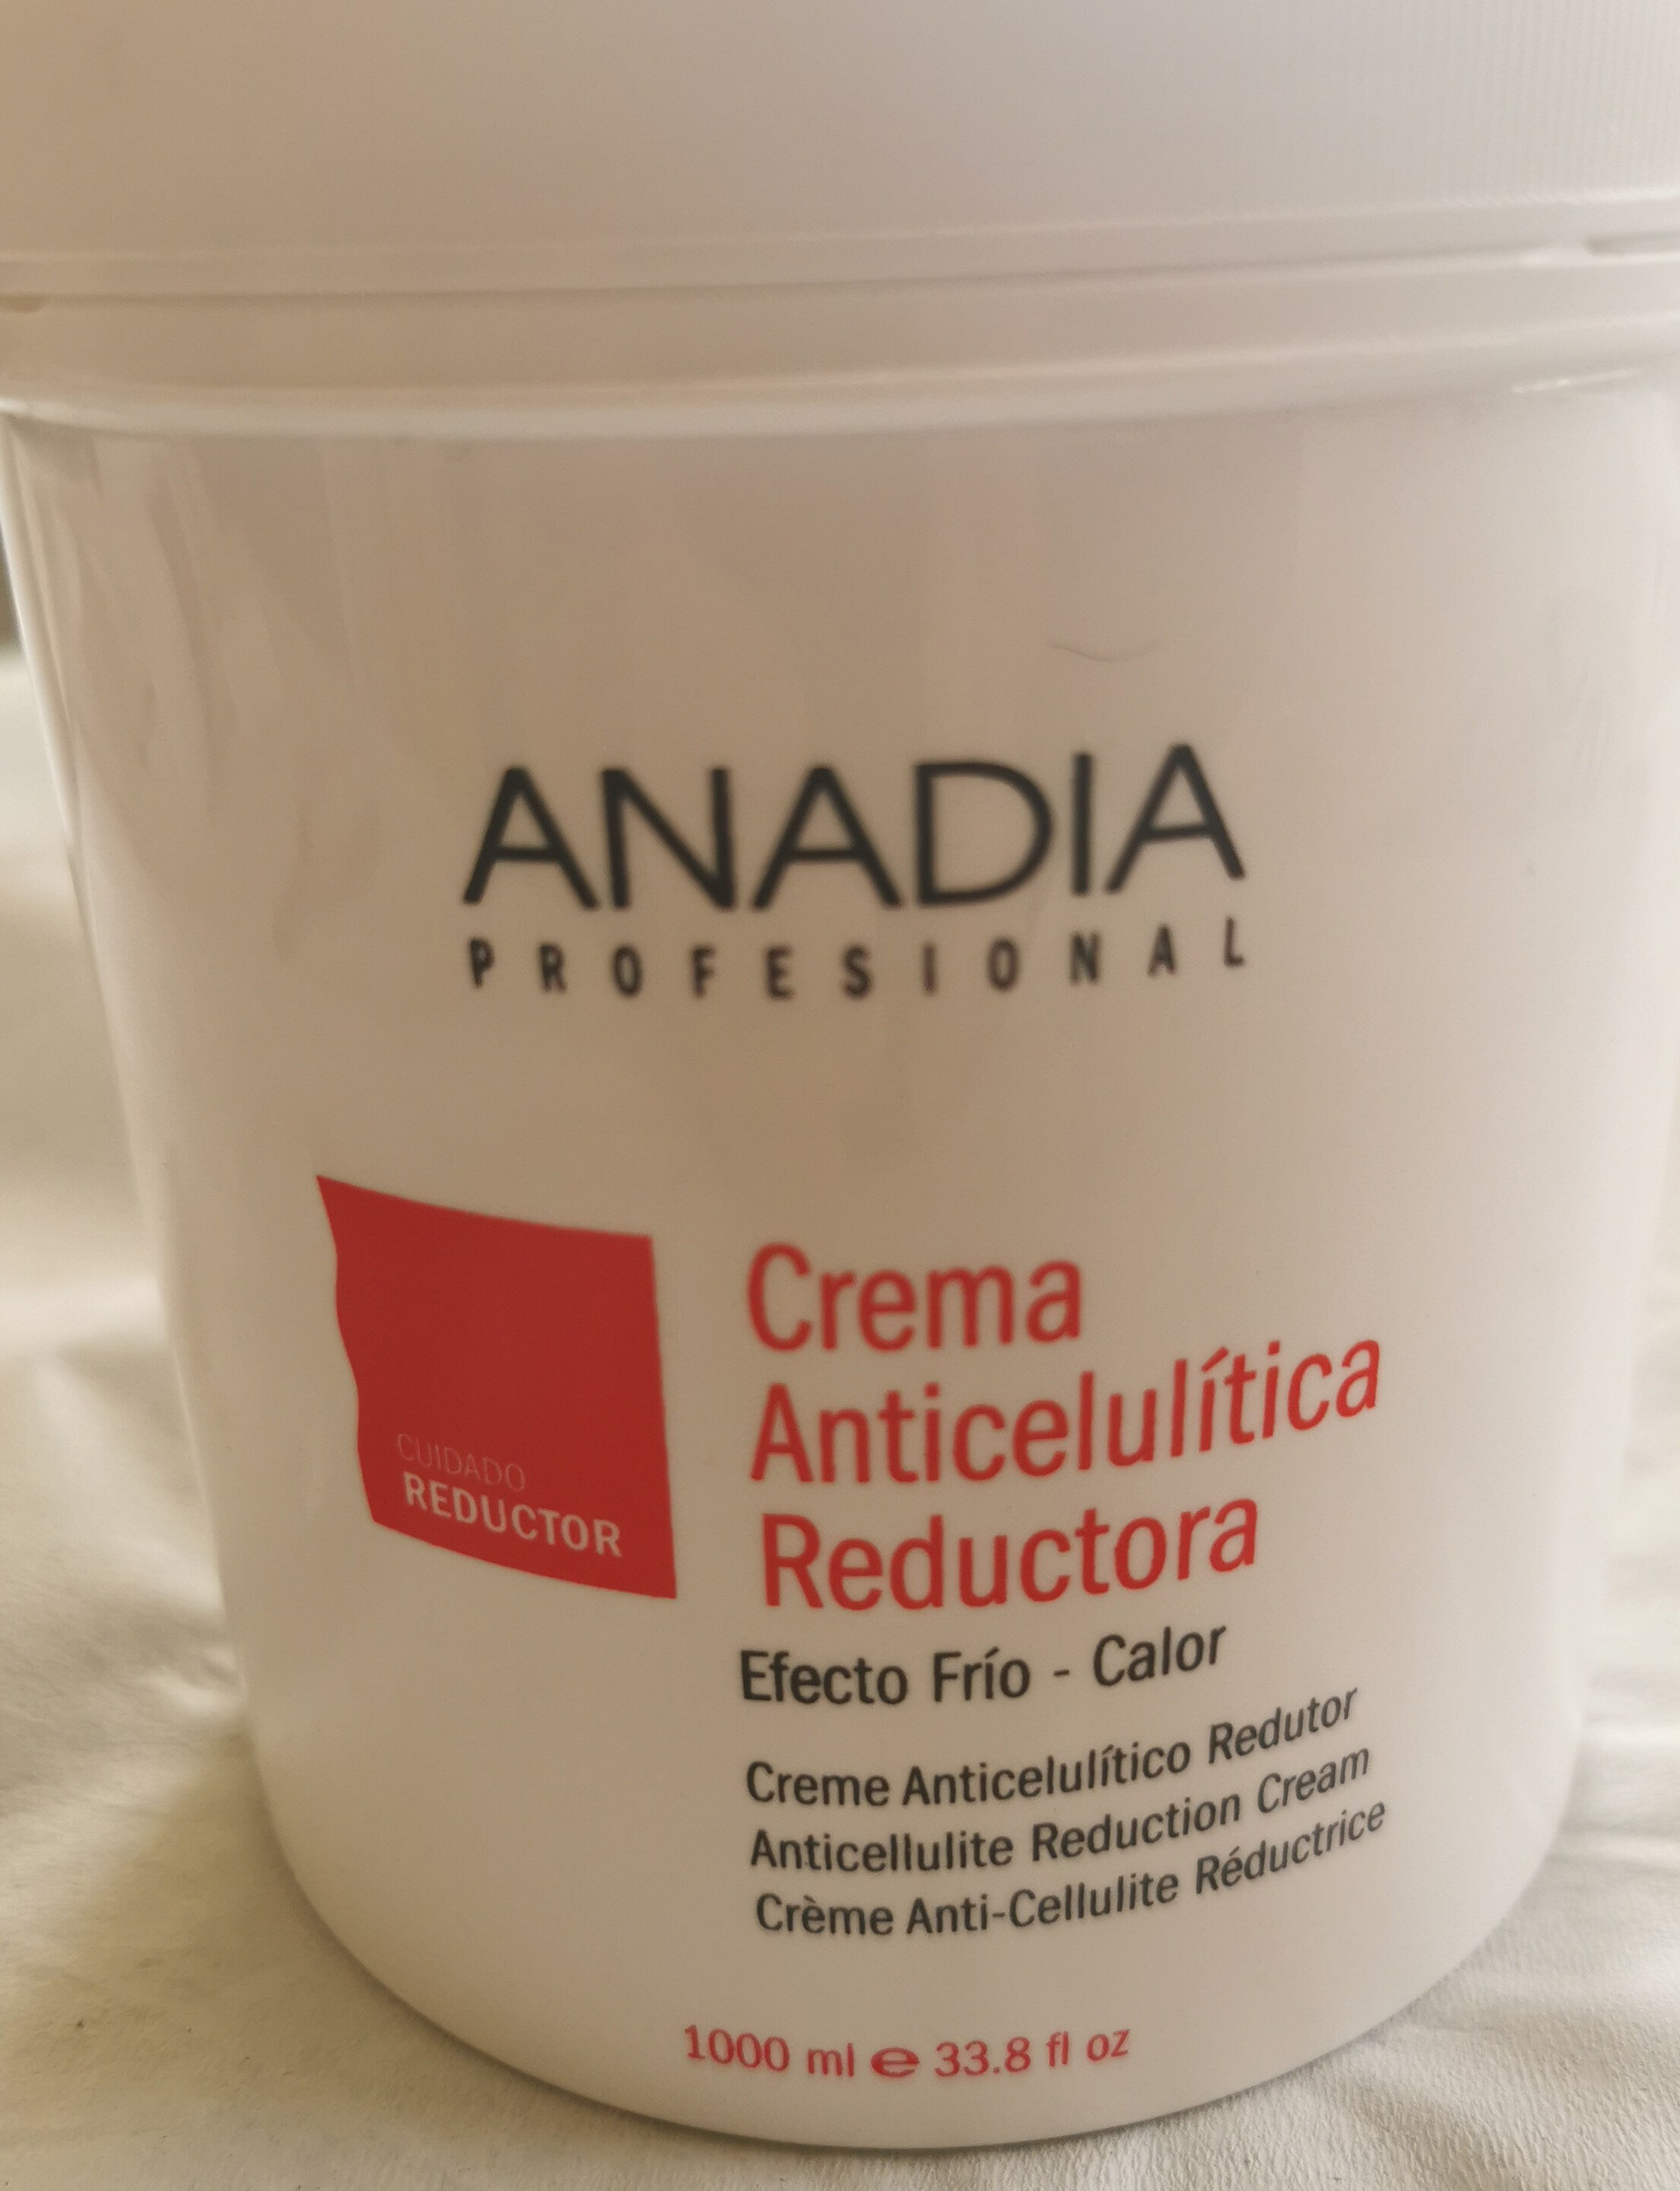 Crema anticelulítica reductora - Product - en